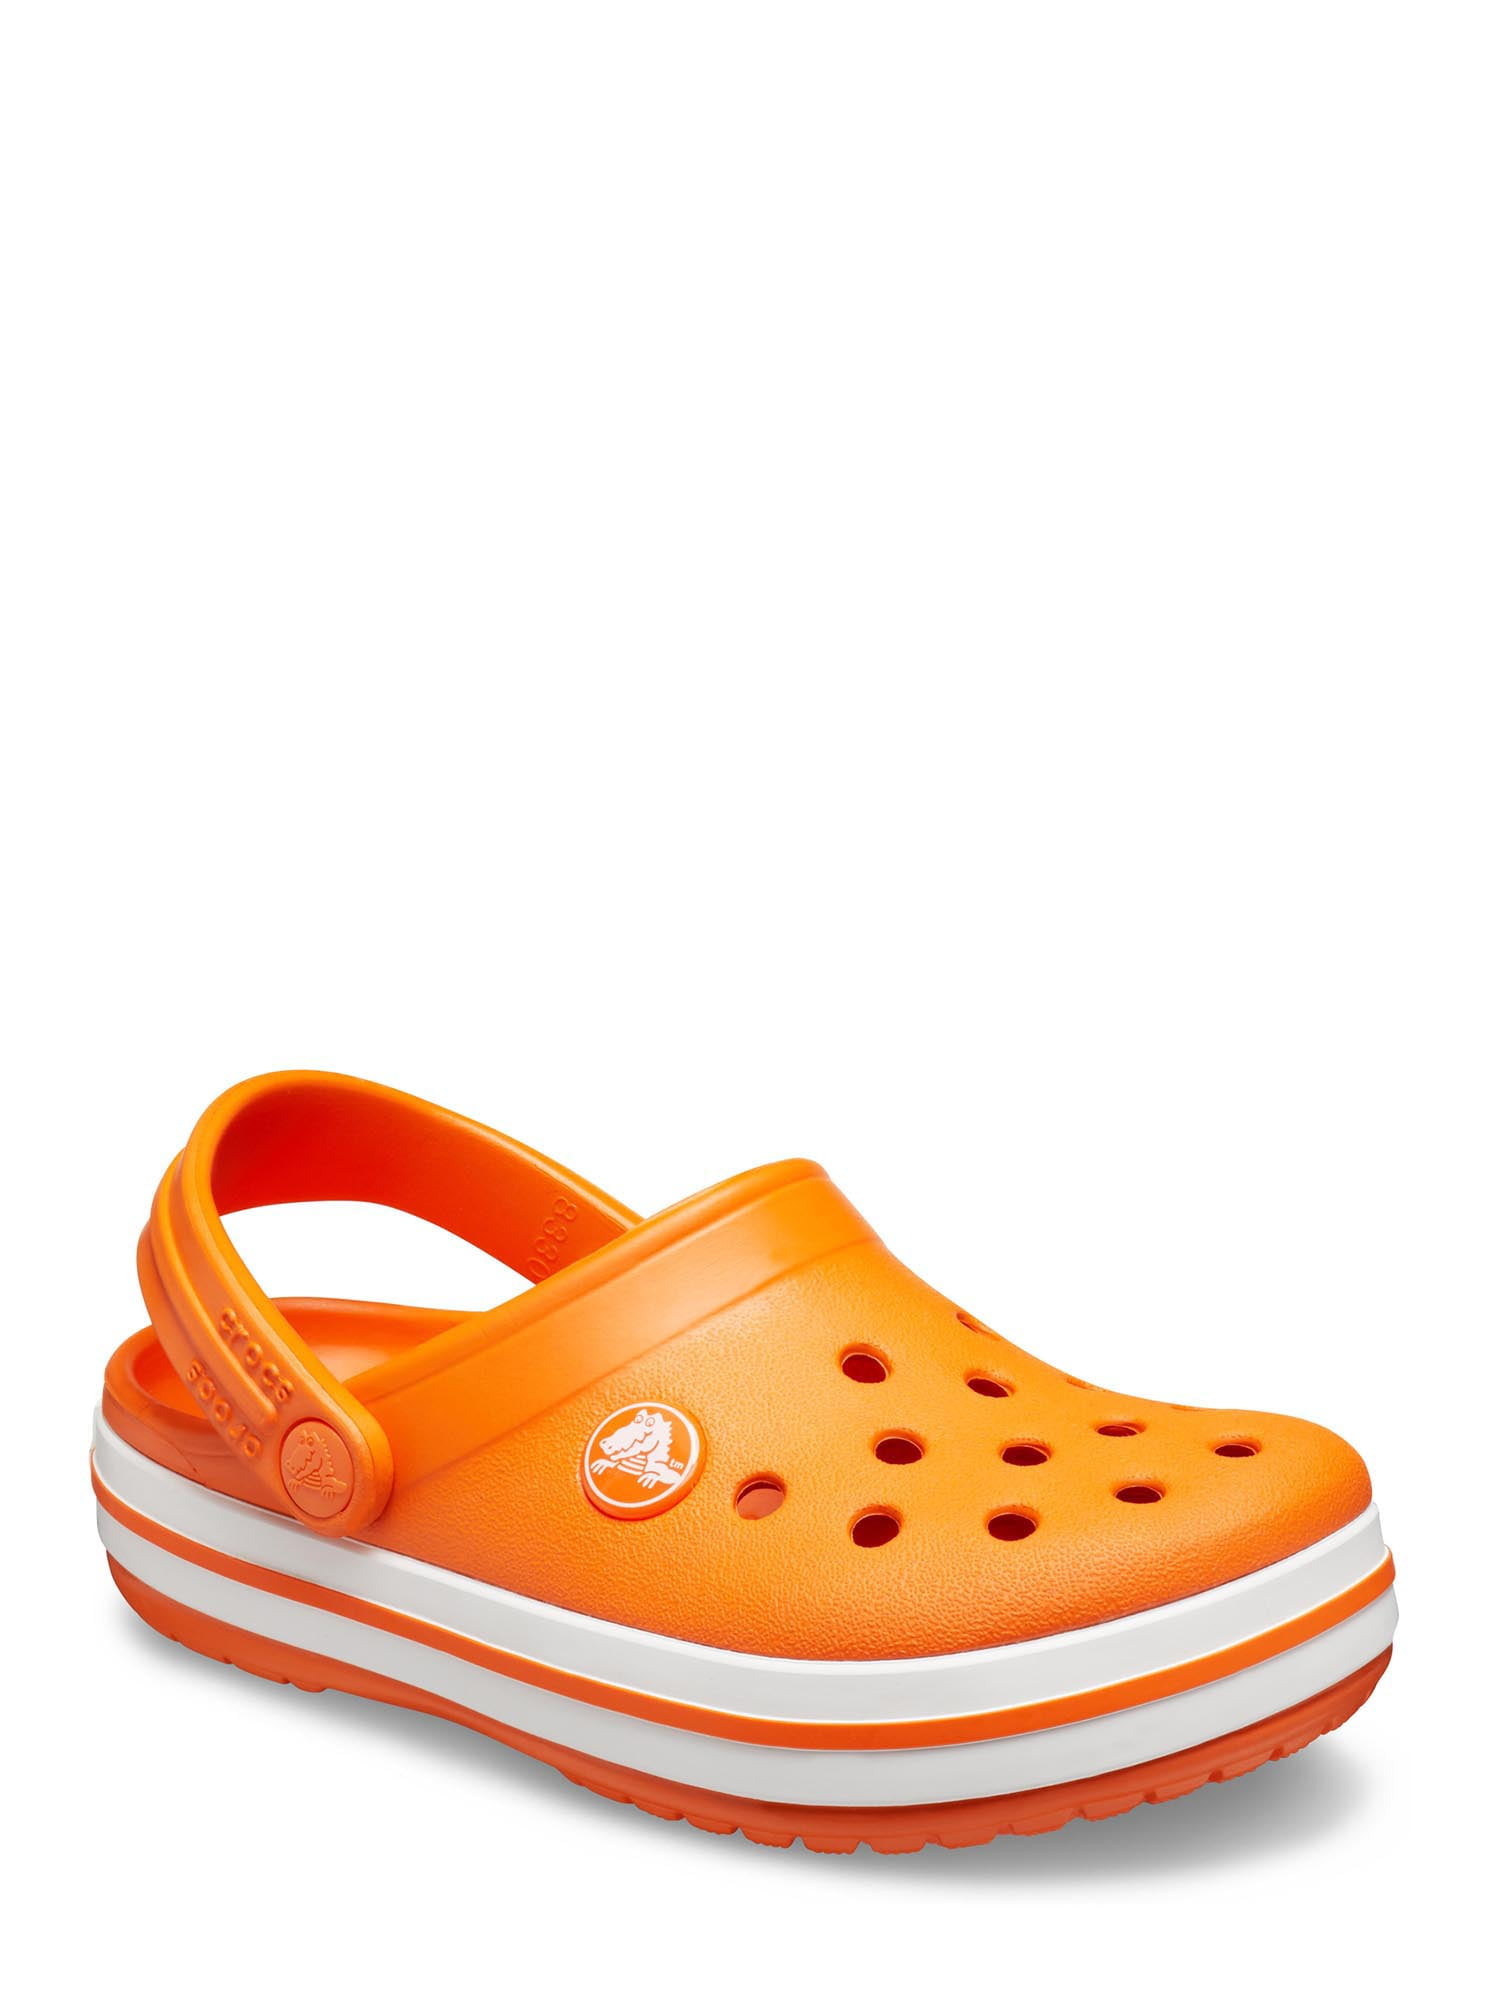 crocs orange color